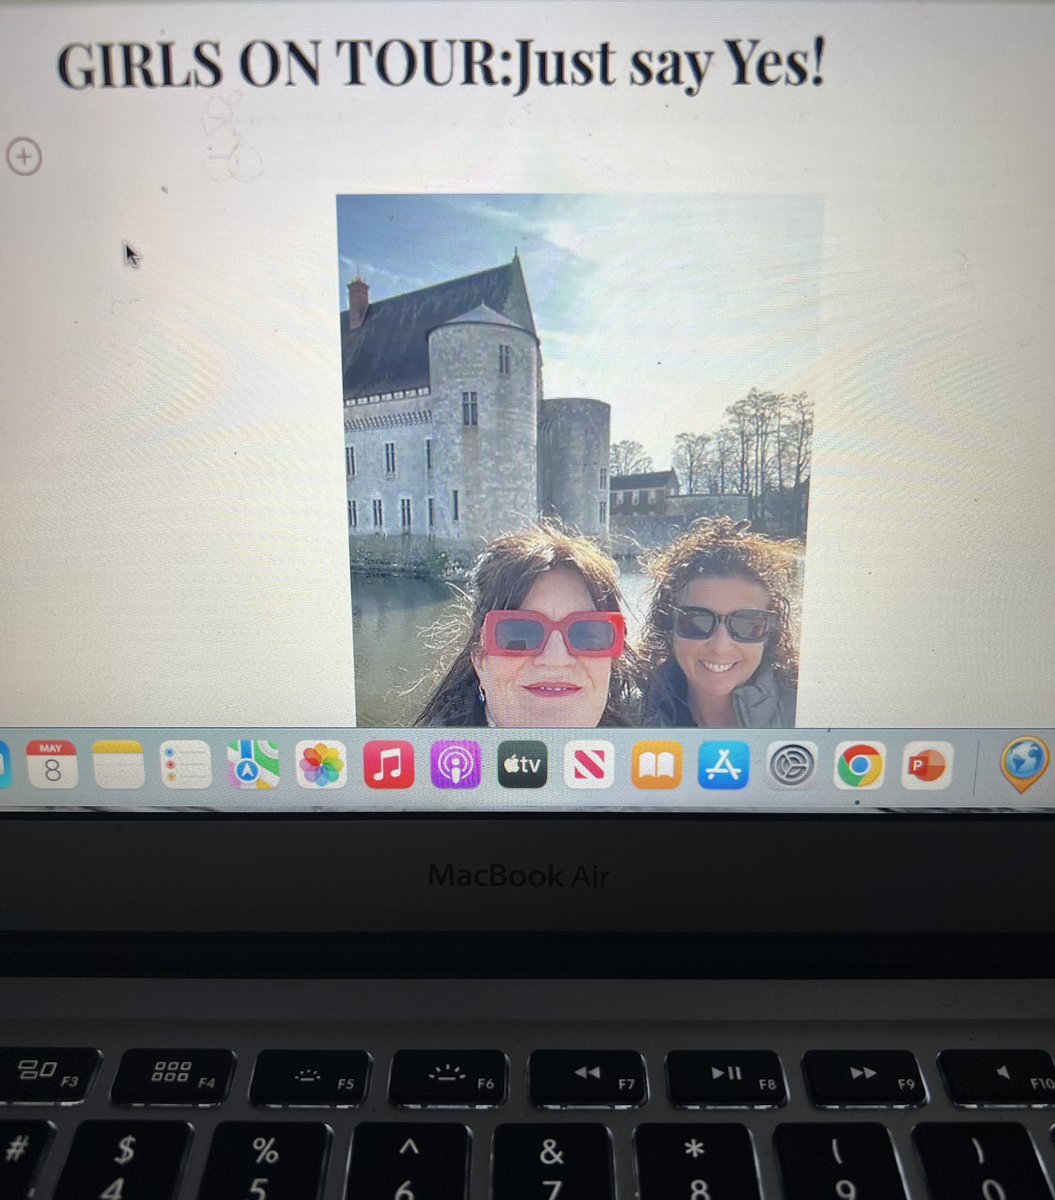 New blog about Girls on tour in France. And @candmclub @Media_CAMC #readtourexplore campaign shuvonshuvoff.co.uk/blog shuvonshuvoff.co.uk @AlanRogers @honestlywithhonor #retirementrebel #inspiringadventure #getawayyouway #CaravanAndMotorhomeClub #LiteraryTravels